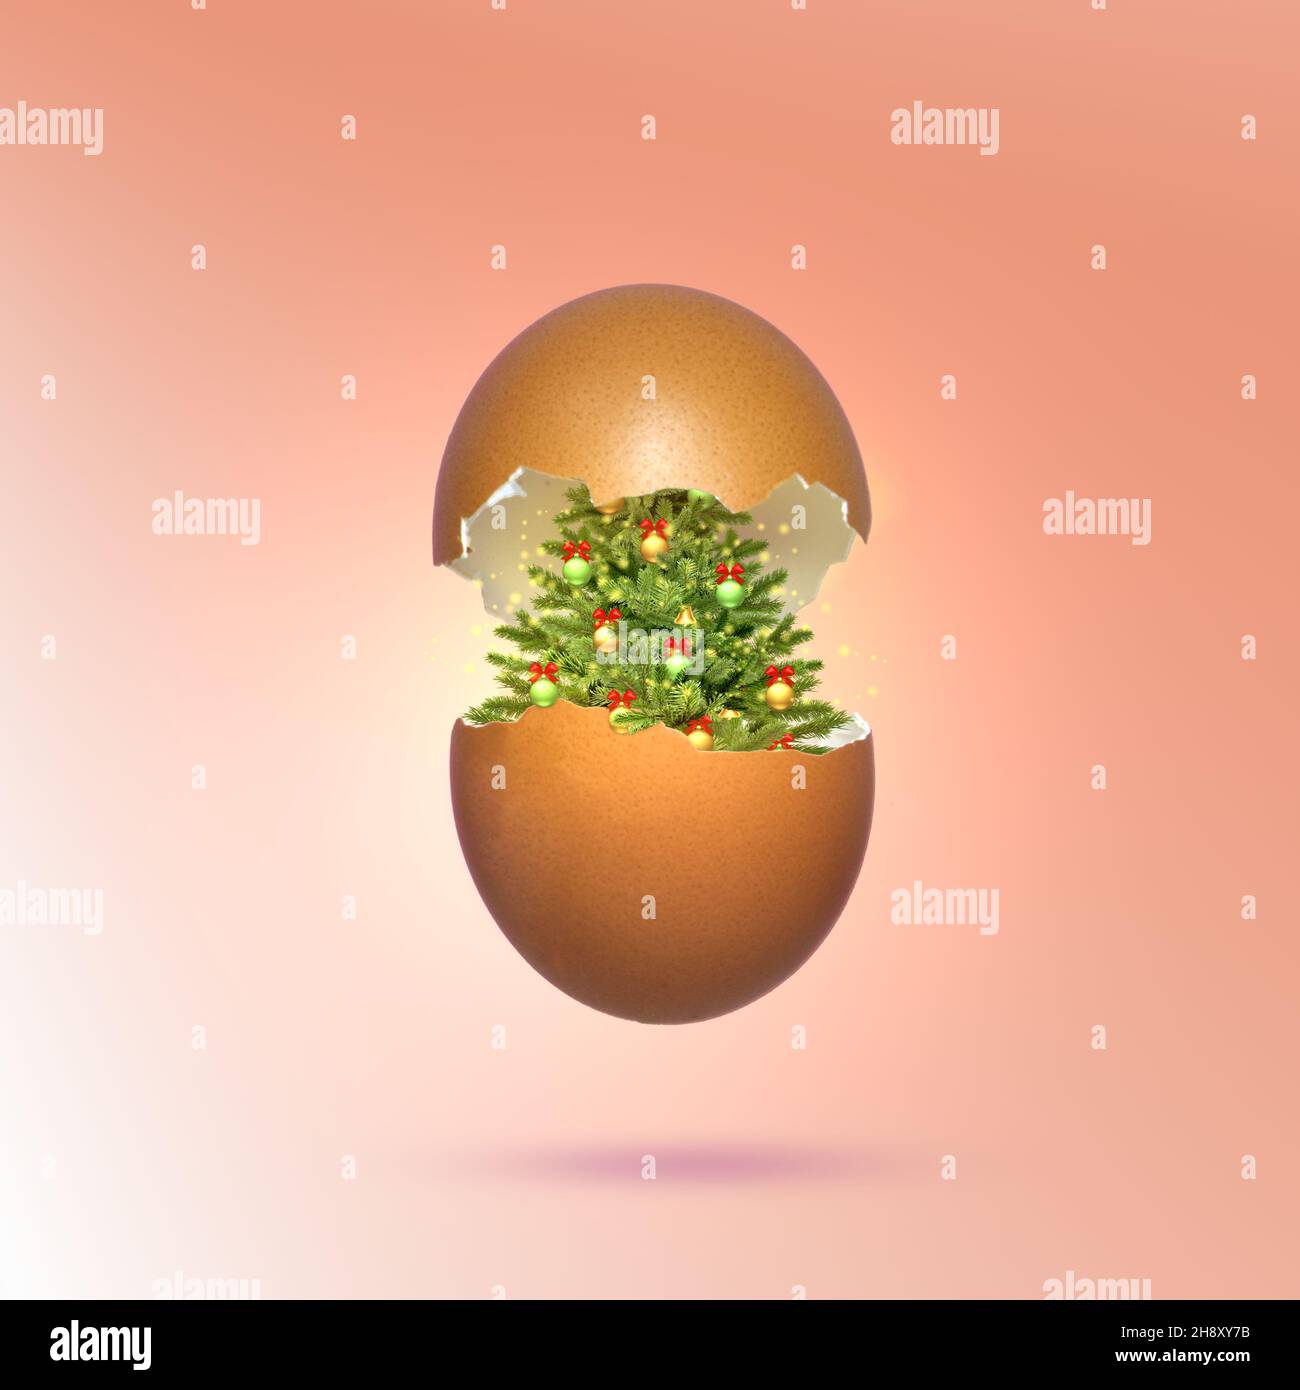 Egg shell broken into halves with a Christmas tree inside. Egg surprise concept. Stock Photo